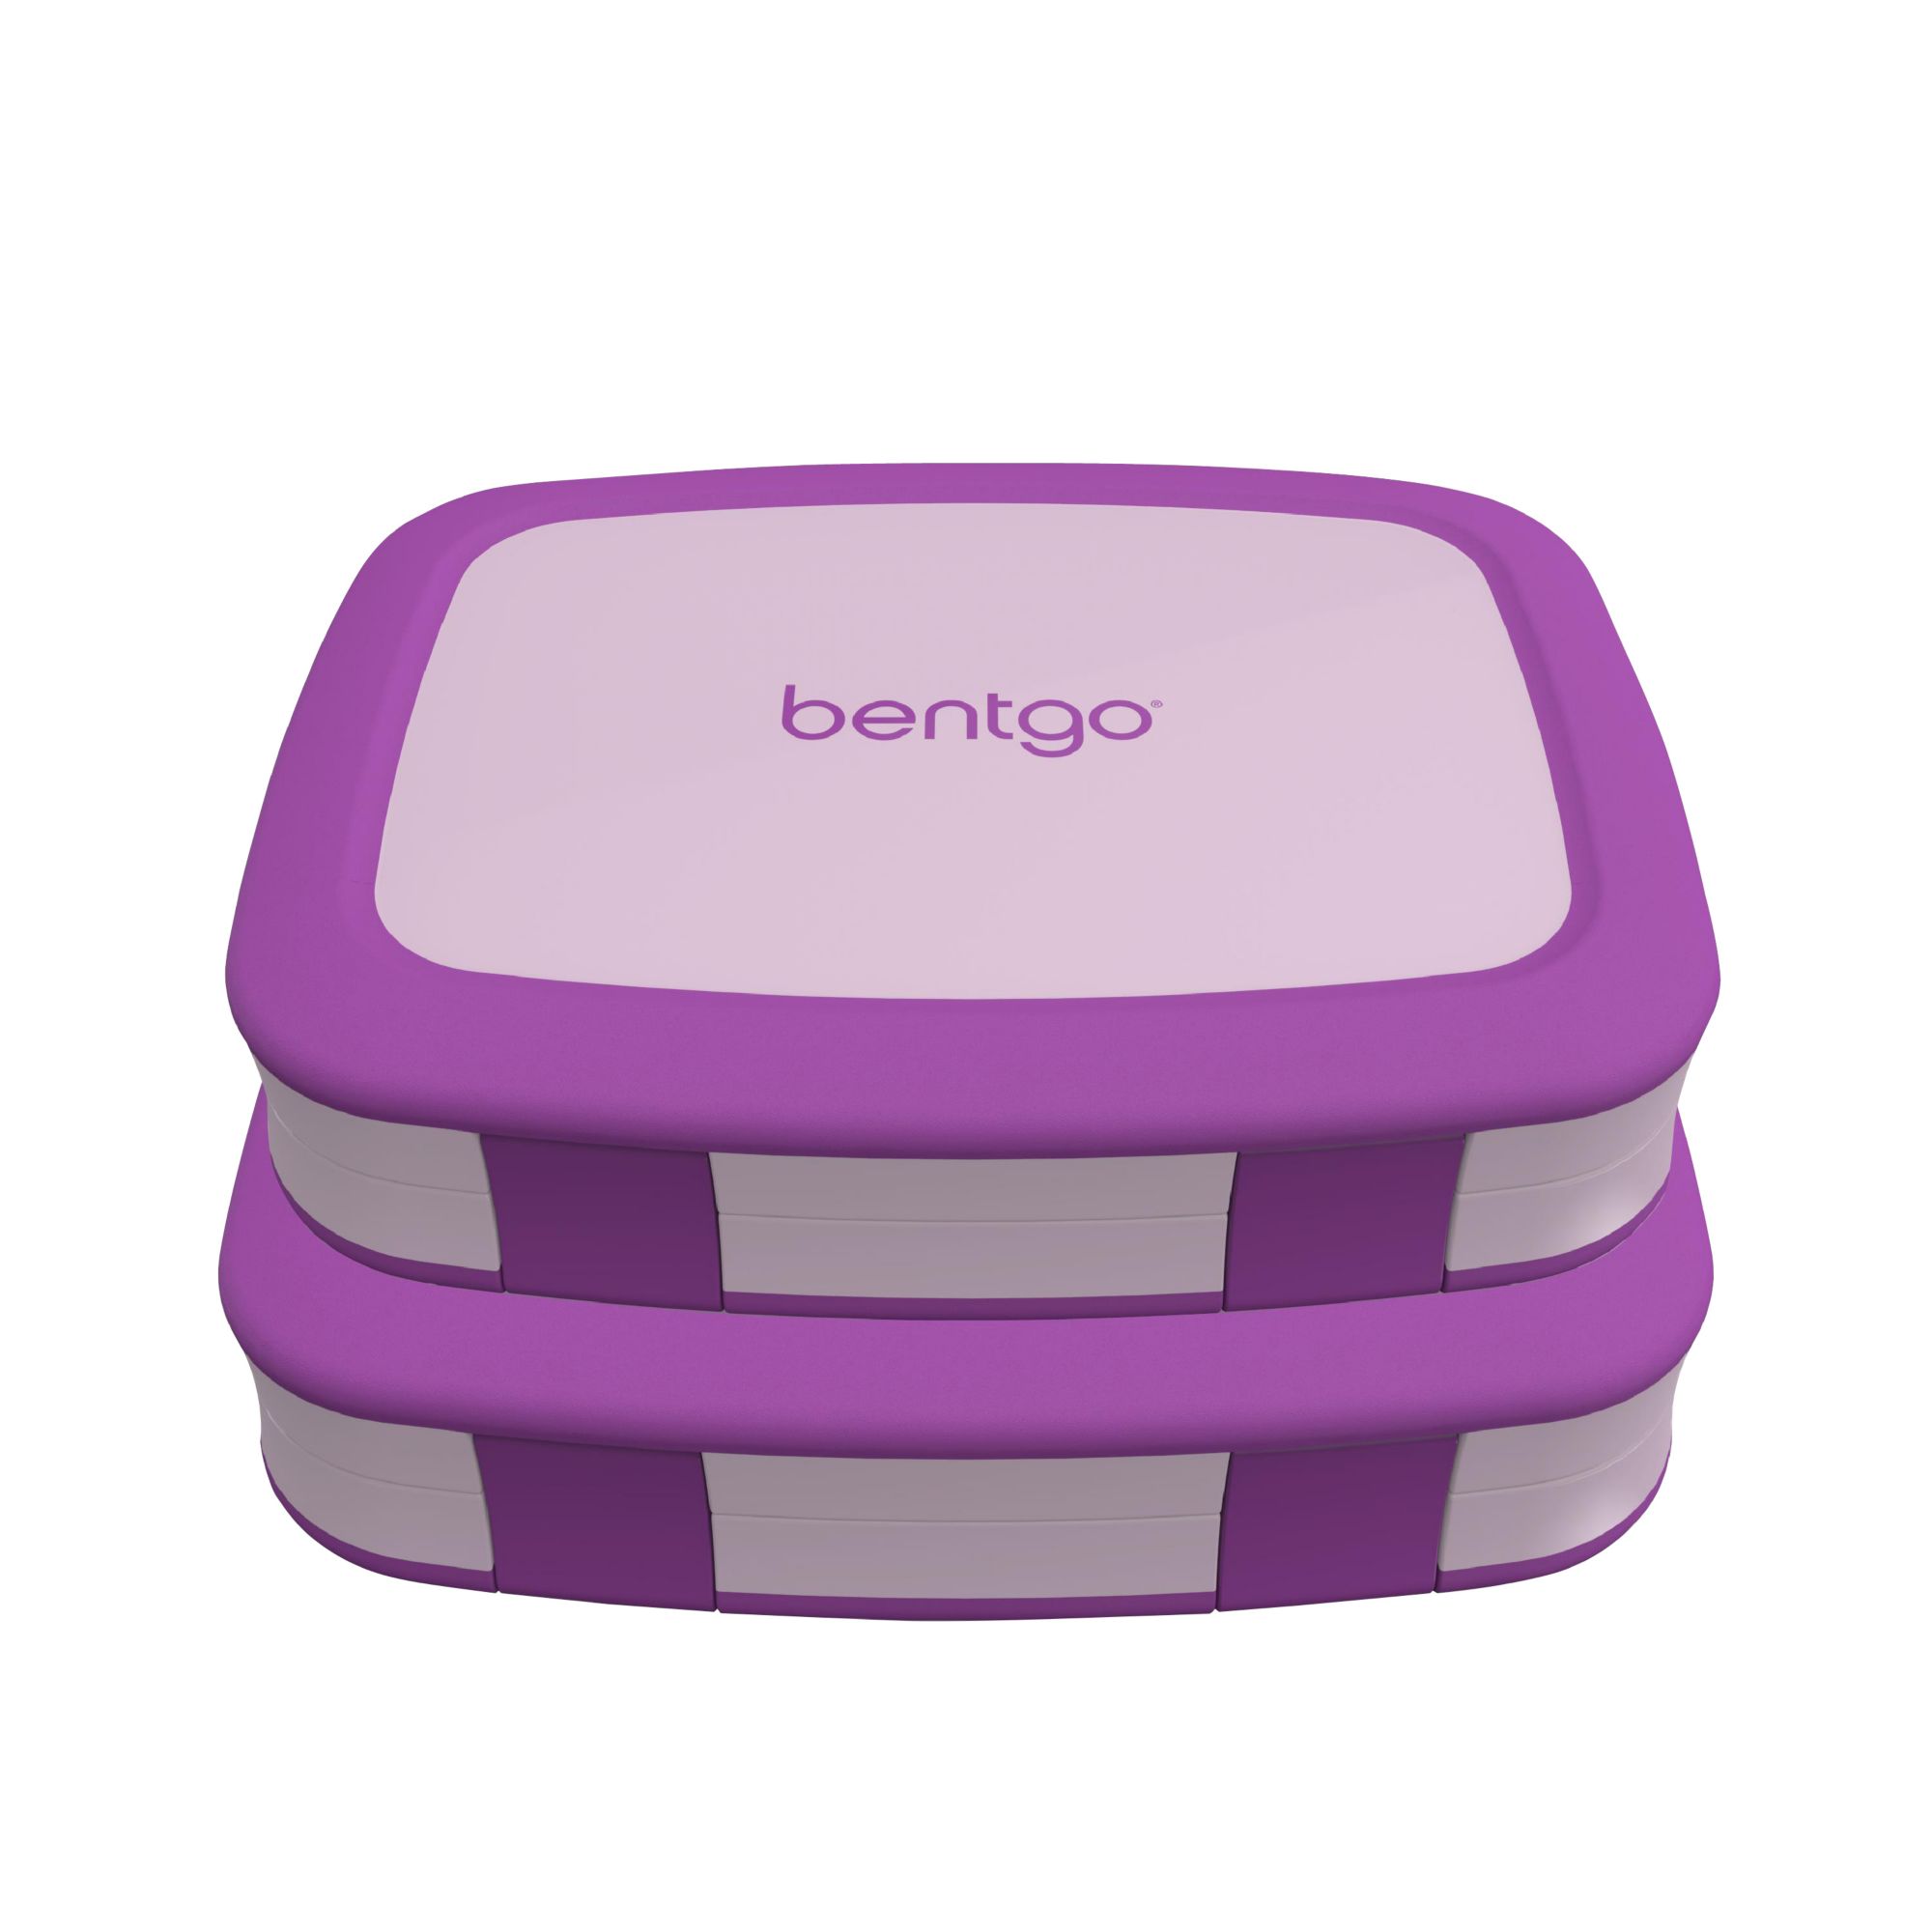 Bentgo Glass Salad Container, Lavender